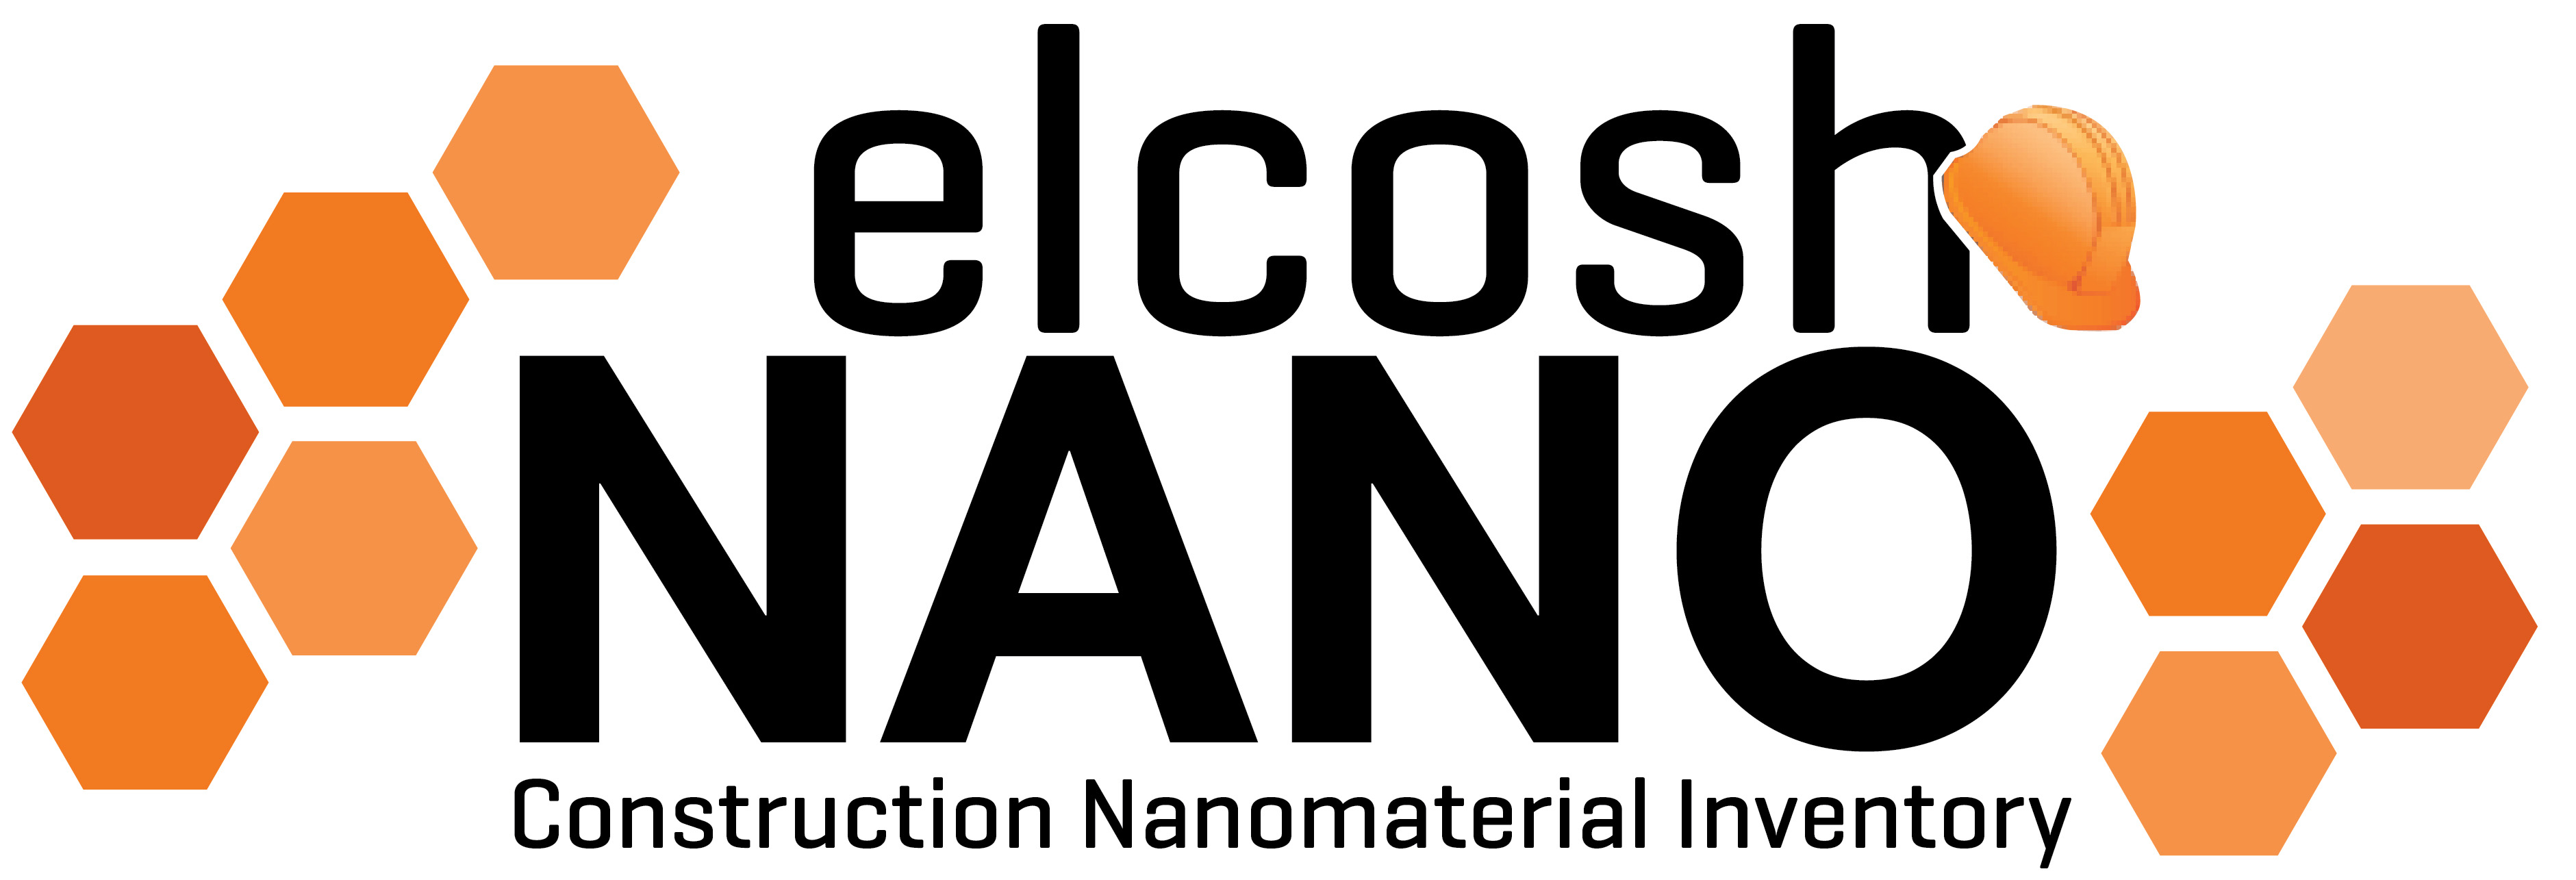 Construction Nanomaterial Inventory